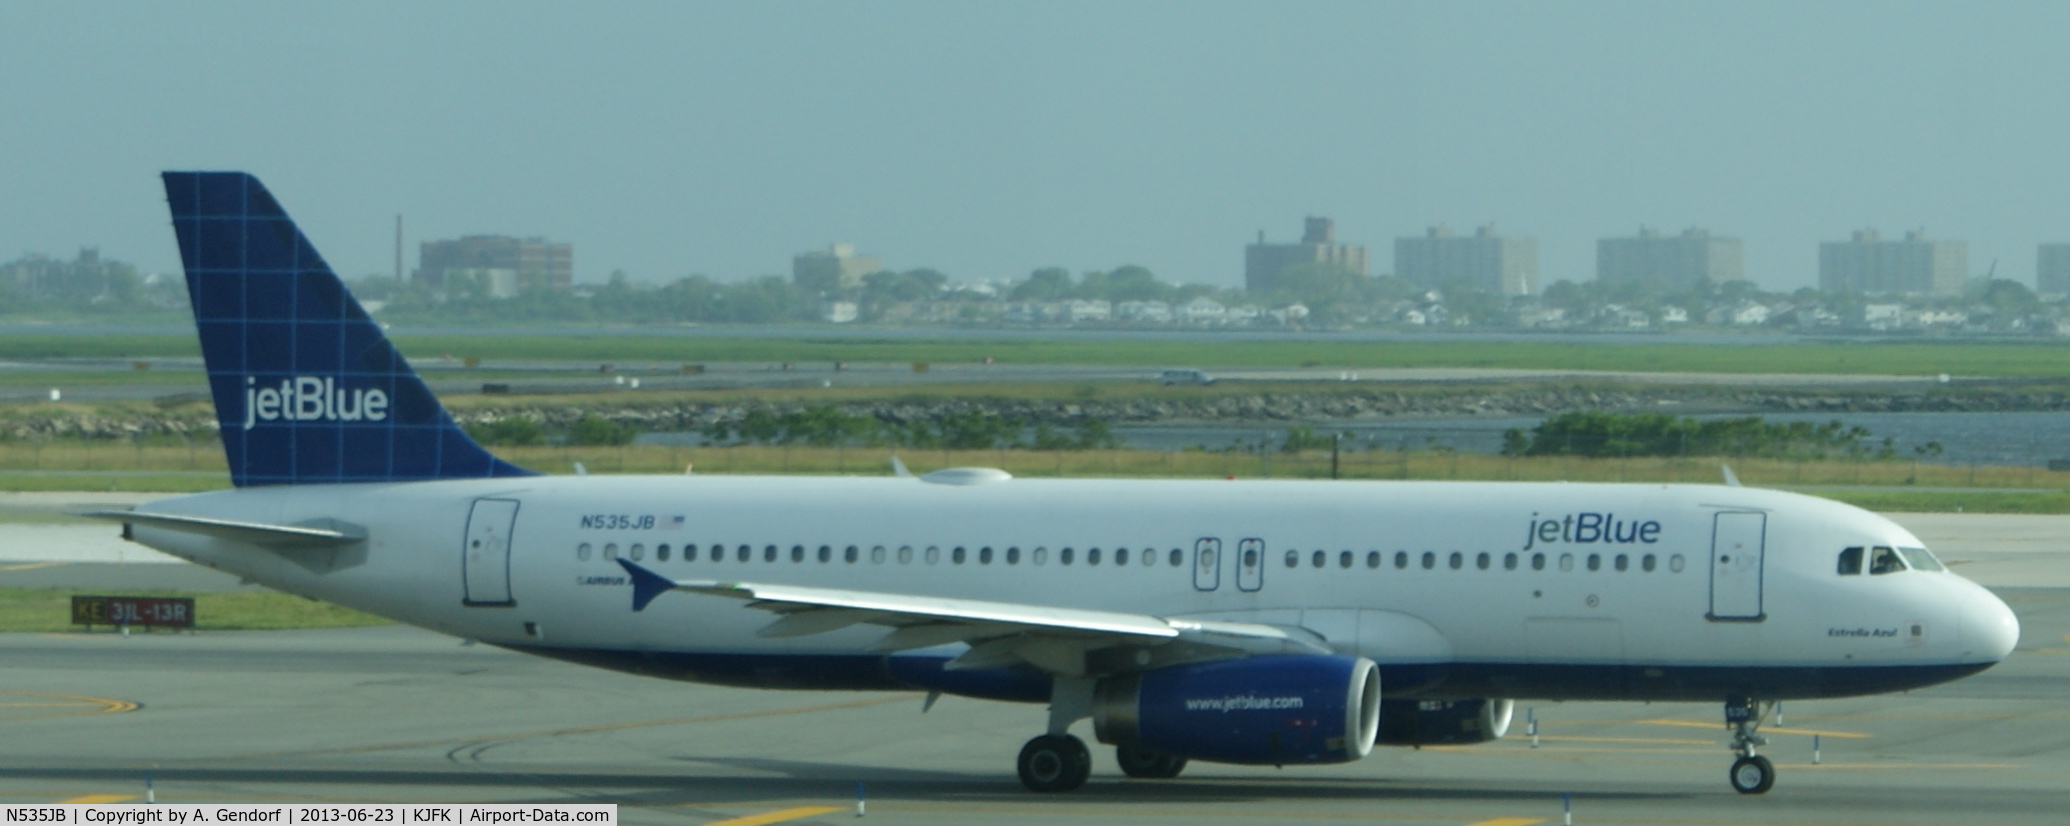 N535JB, 2002 Airbus A320-232 C/N 1739, Jet Blue, seen here at New York - JFK(KJFK) taxiing after landing